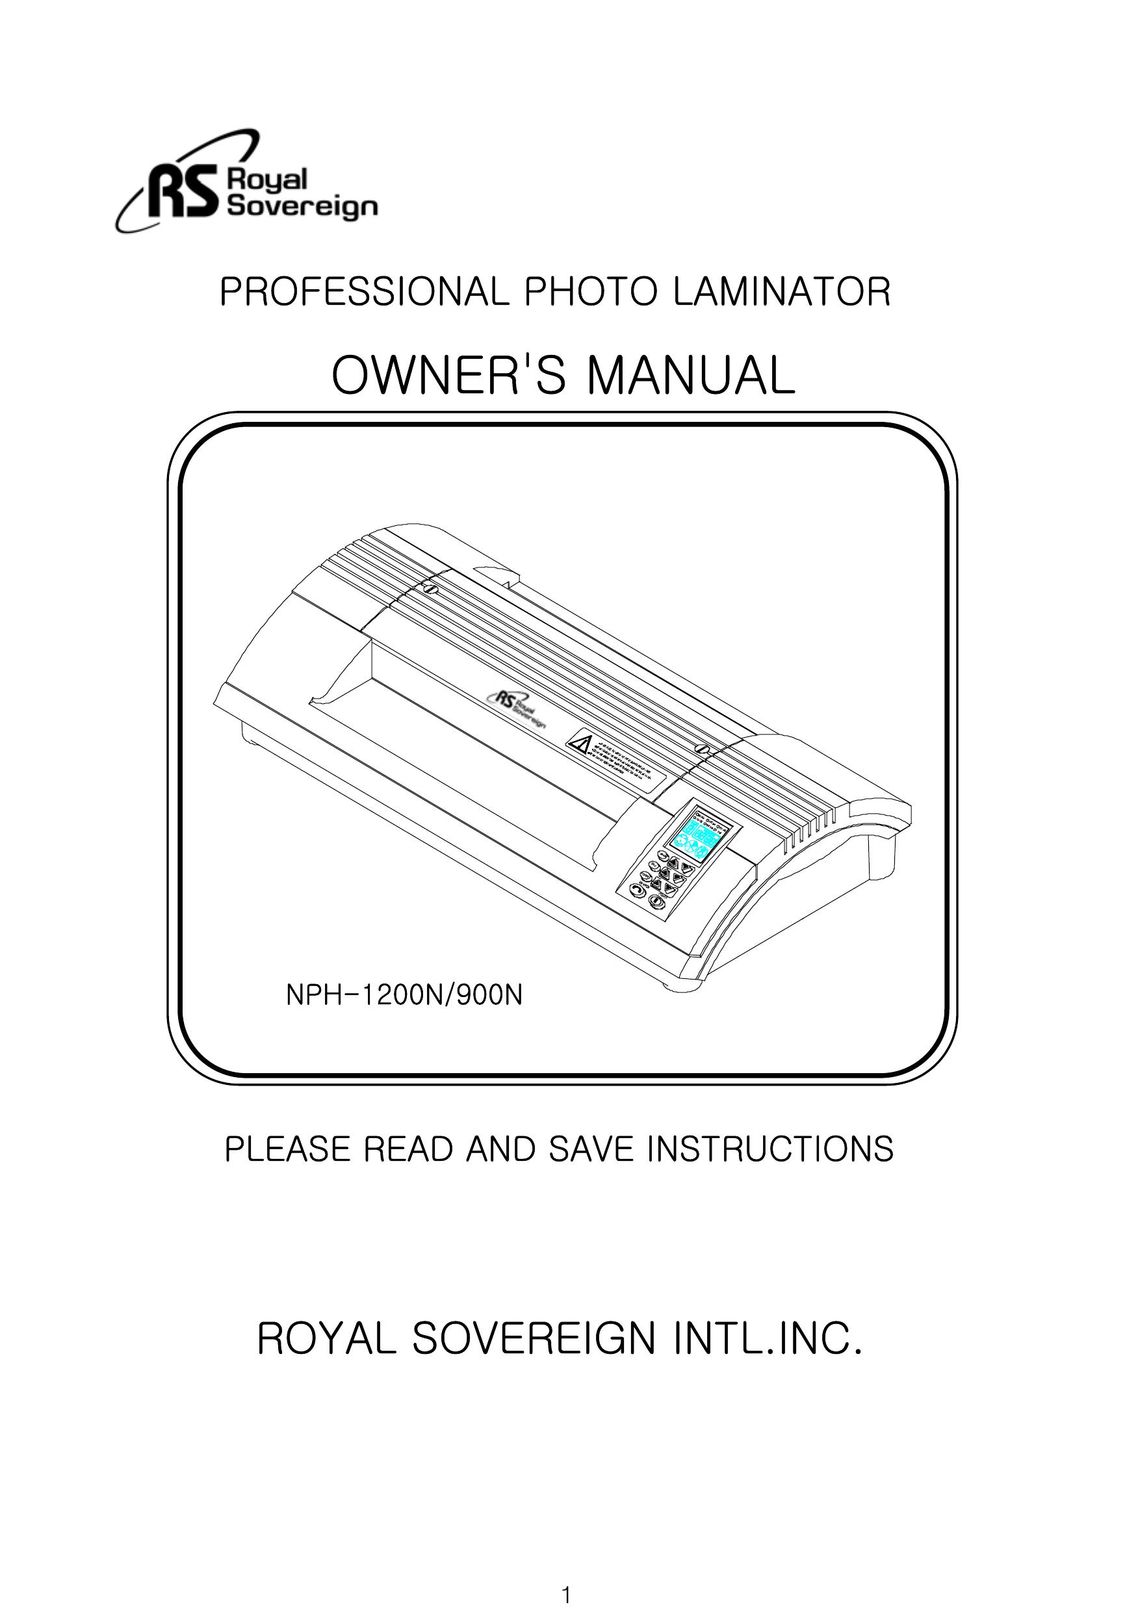 Royal Sovereign NPH-1200 Laminator User Manual